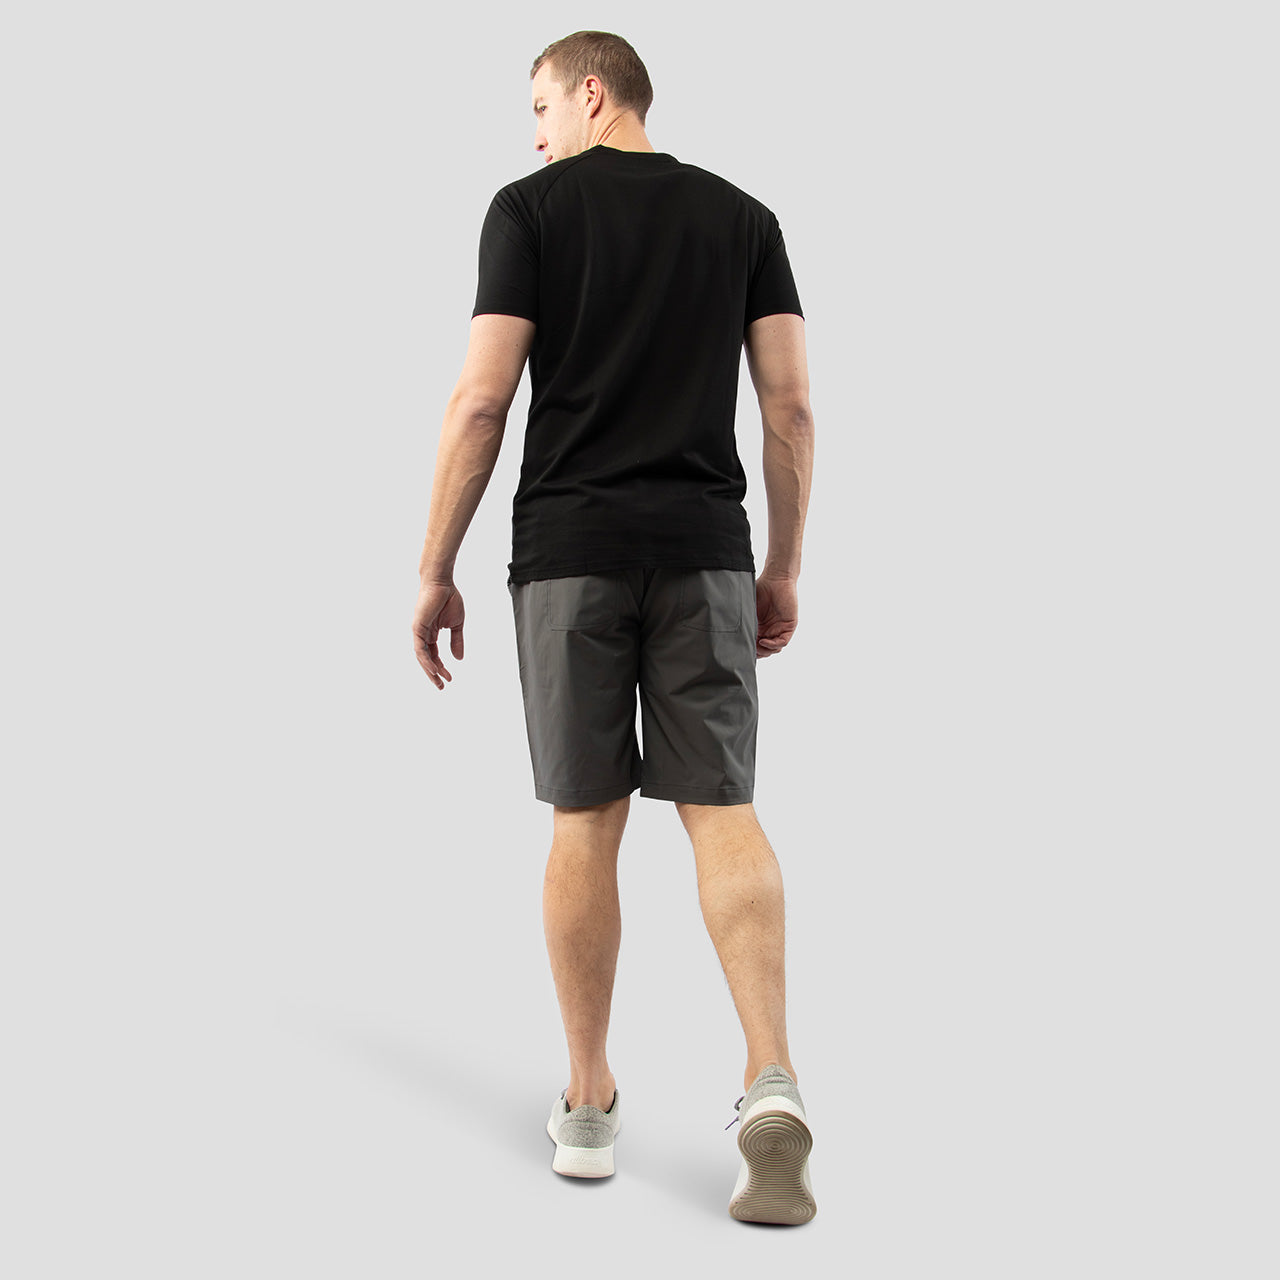 Black Dry-Lite Triblend Athletic Shirt for Tall Slim Men